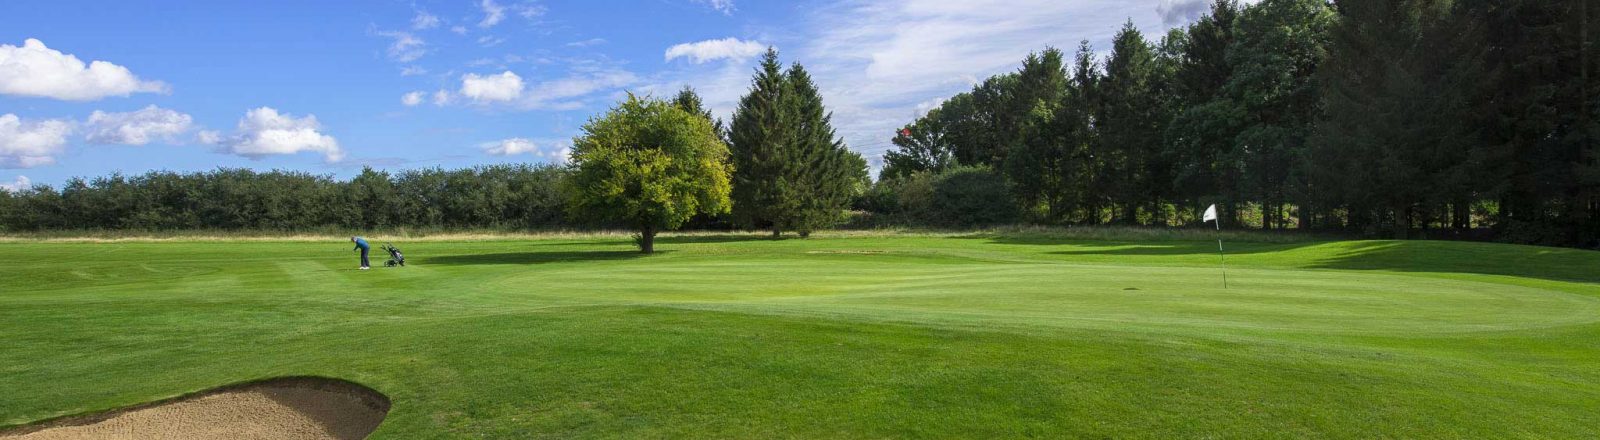 Redbourn Golf Club wide course view